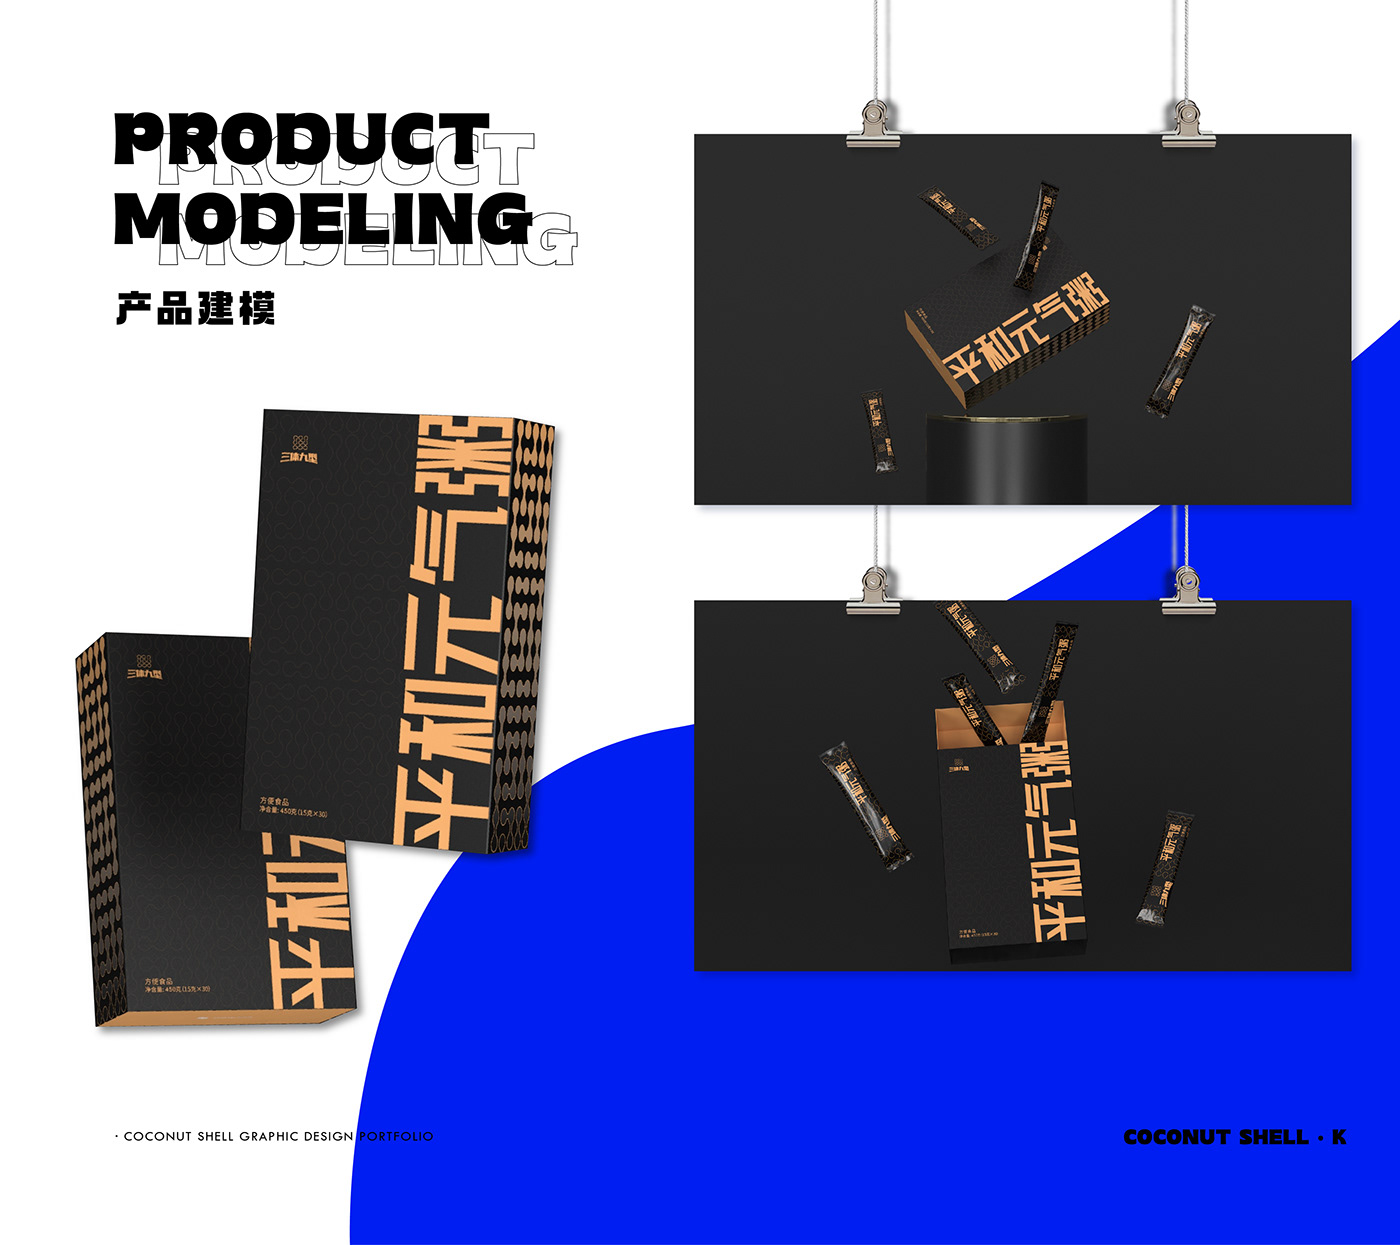 3D形象 IP形象设计  吉祥物设计 产品渲染 作品集 portfolio 平面設計 平面设计 排版 海报设计 画册排版